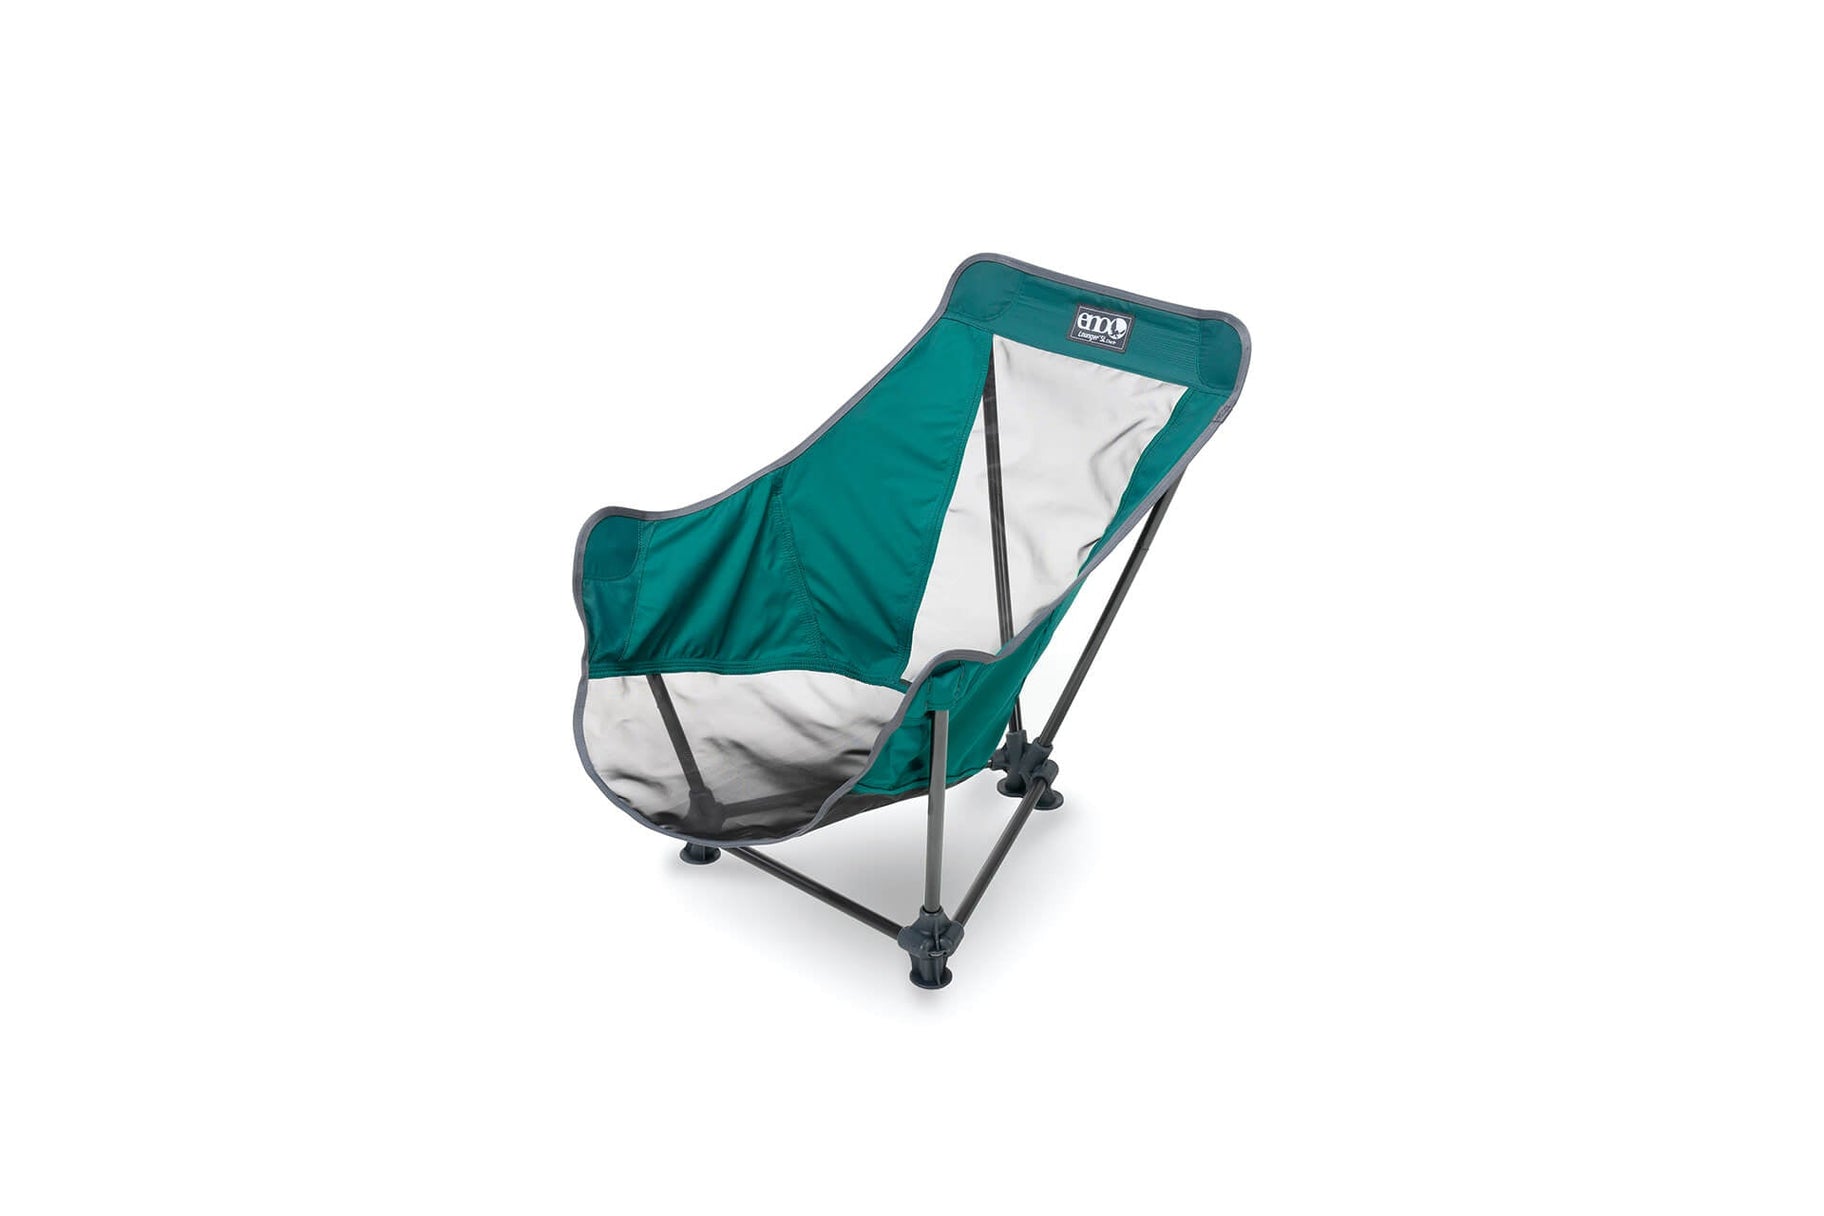 Lounger SL Chair - Portable, Lightweight Hammock Chair | ENO